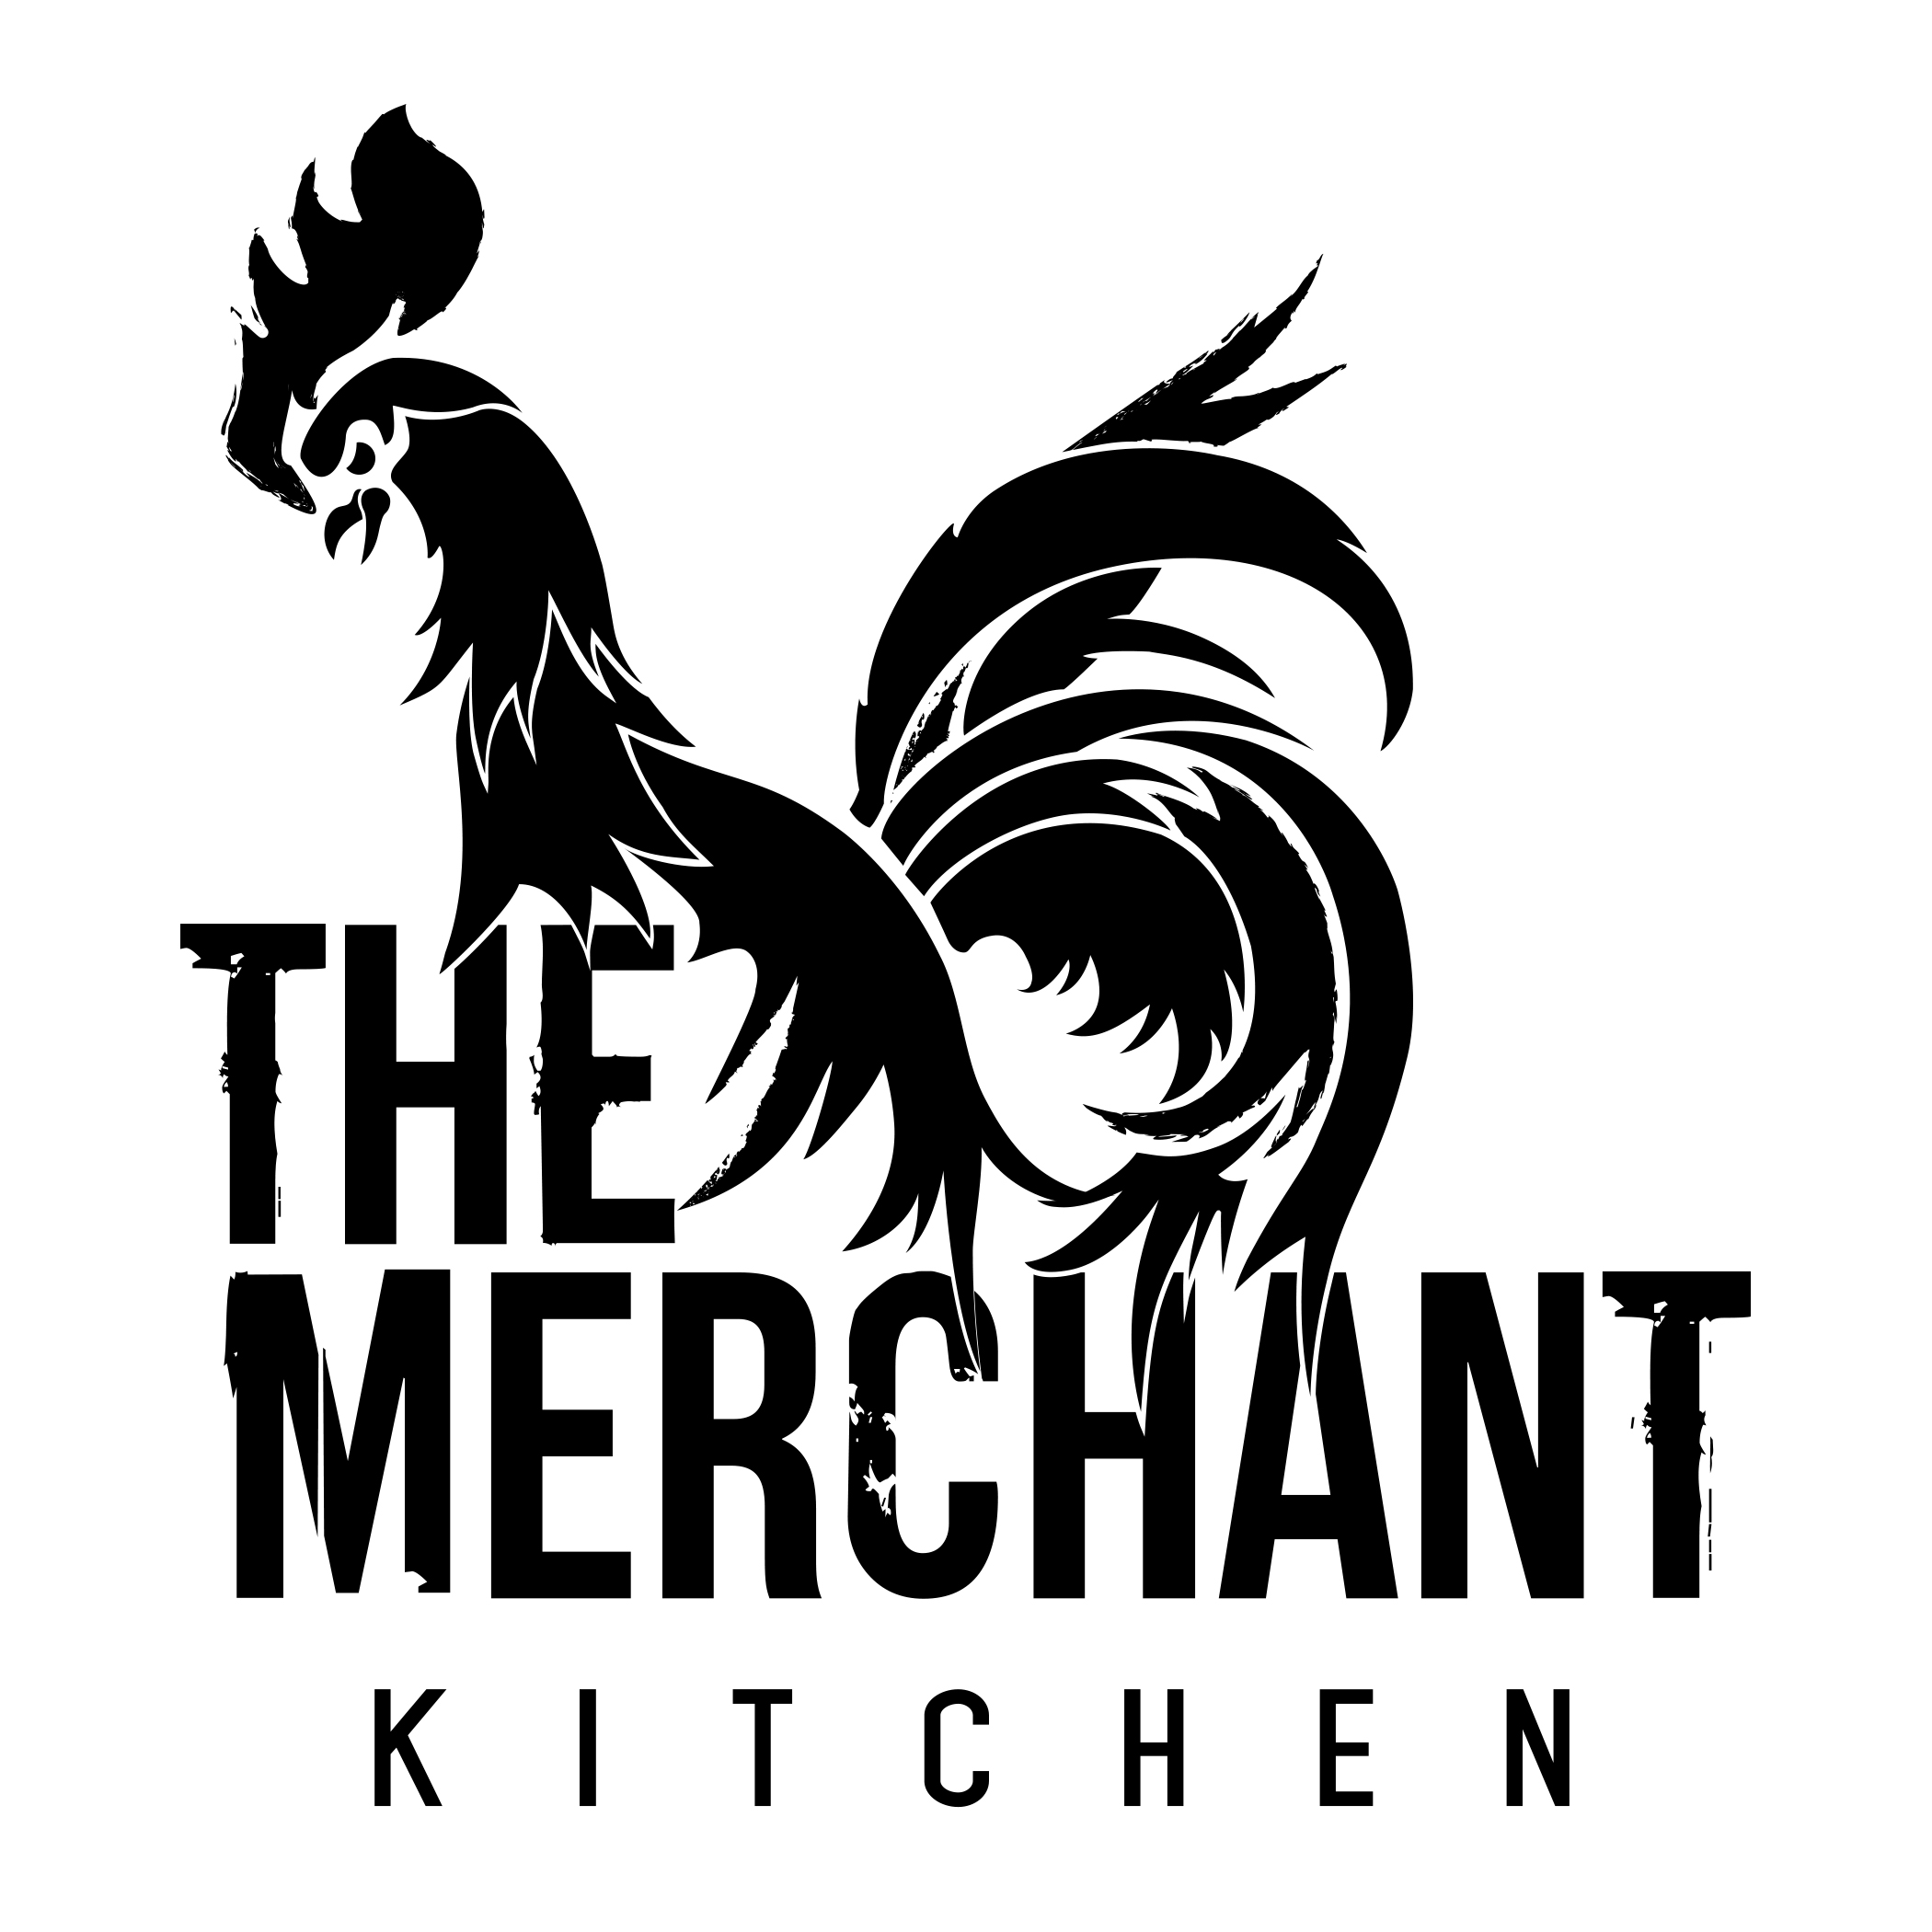 Merchant kitchen